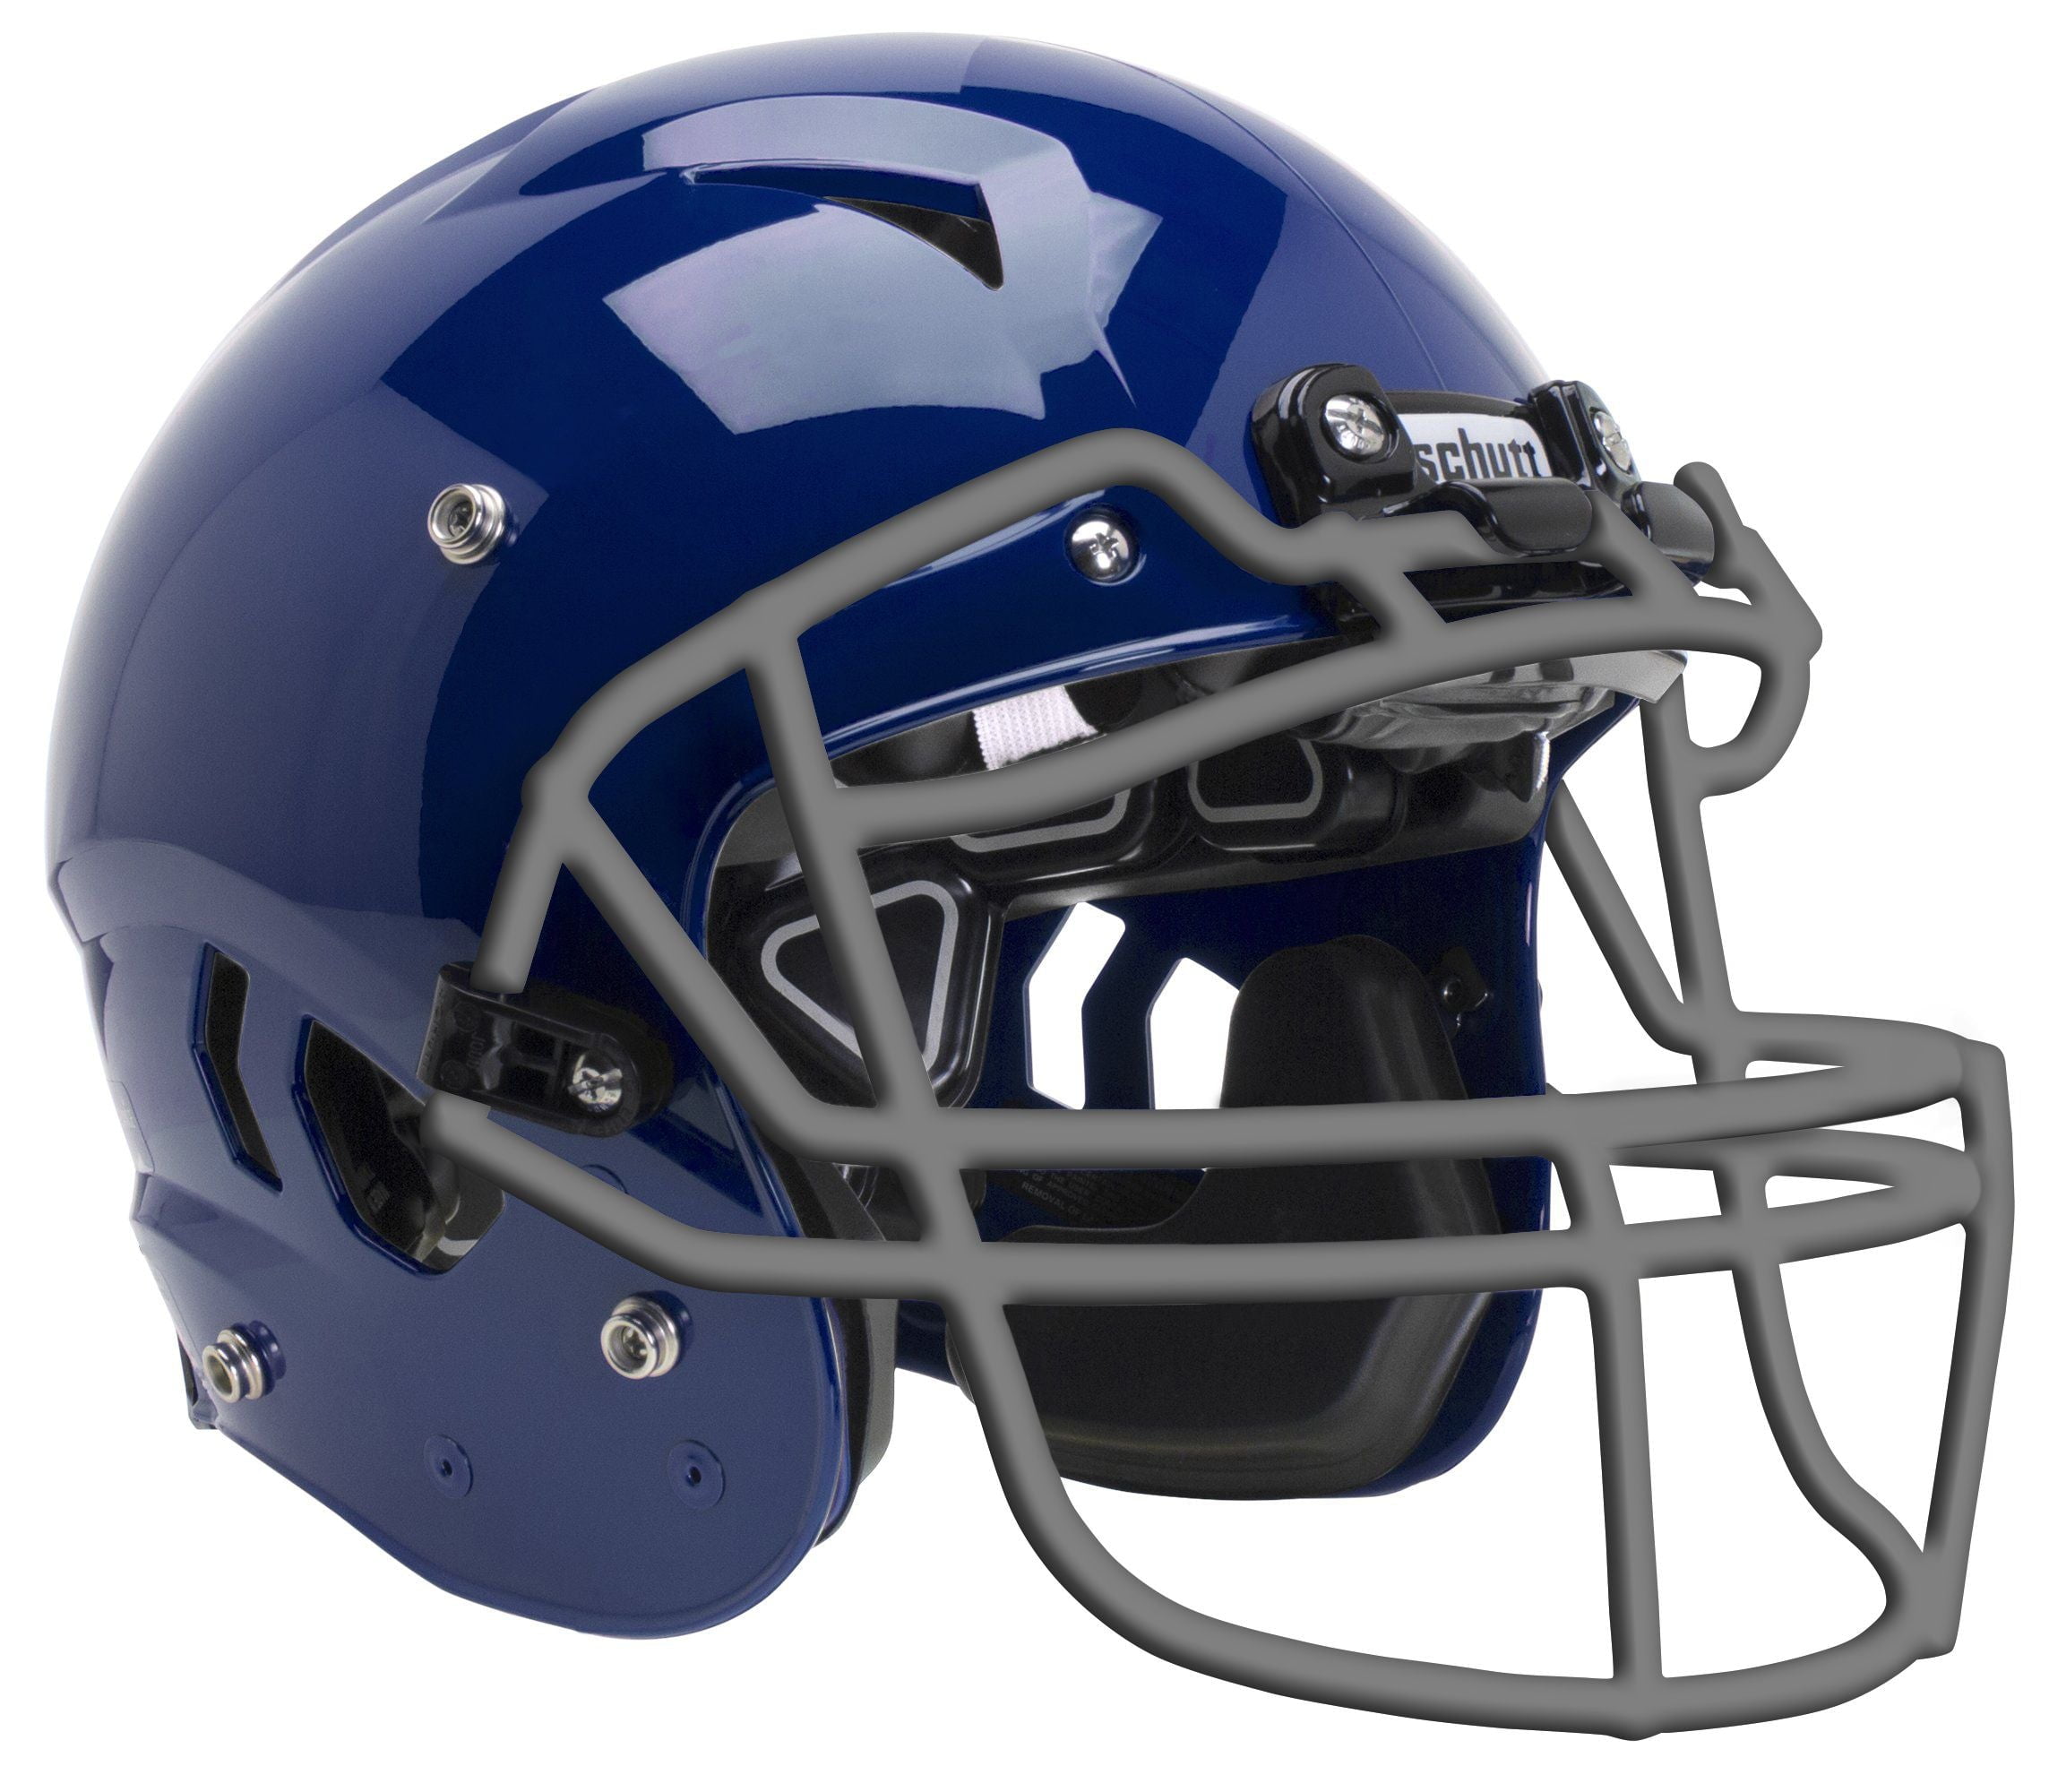 *NEW* Schutt AiR XP Football Helmet LARGE Color: METALLIC DARK ROYAL BLUE 